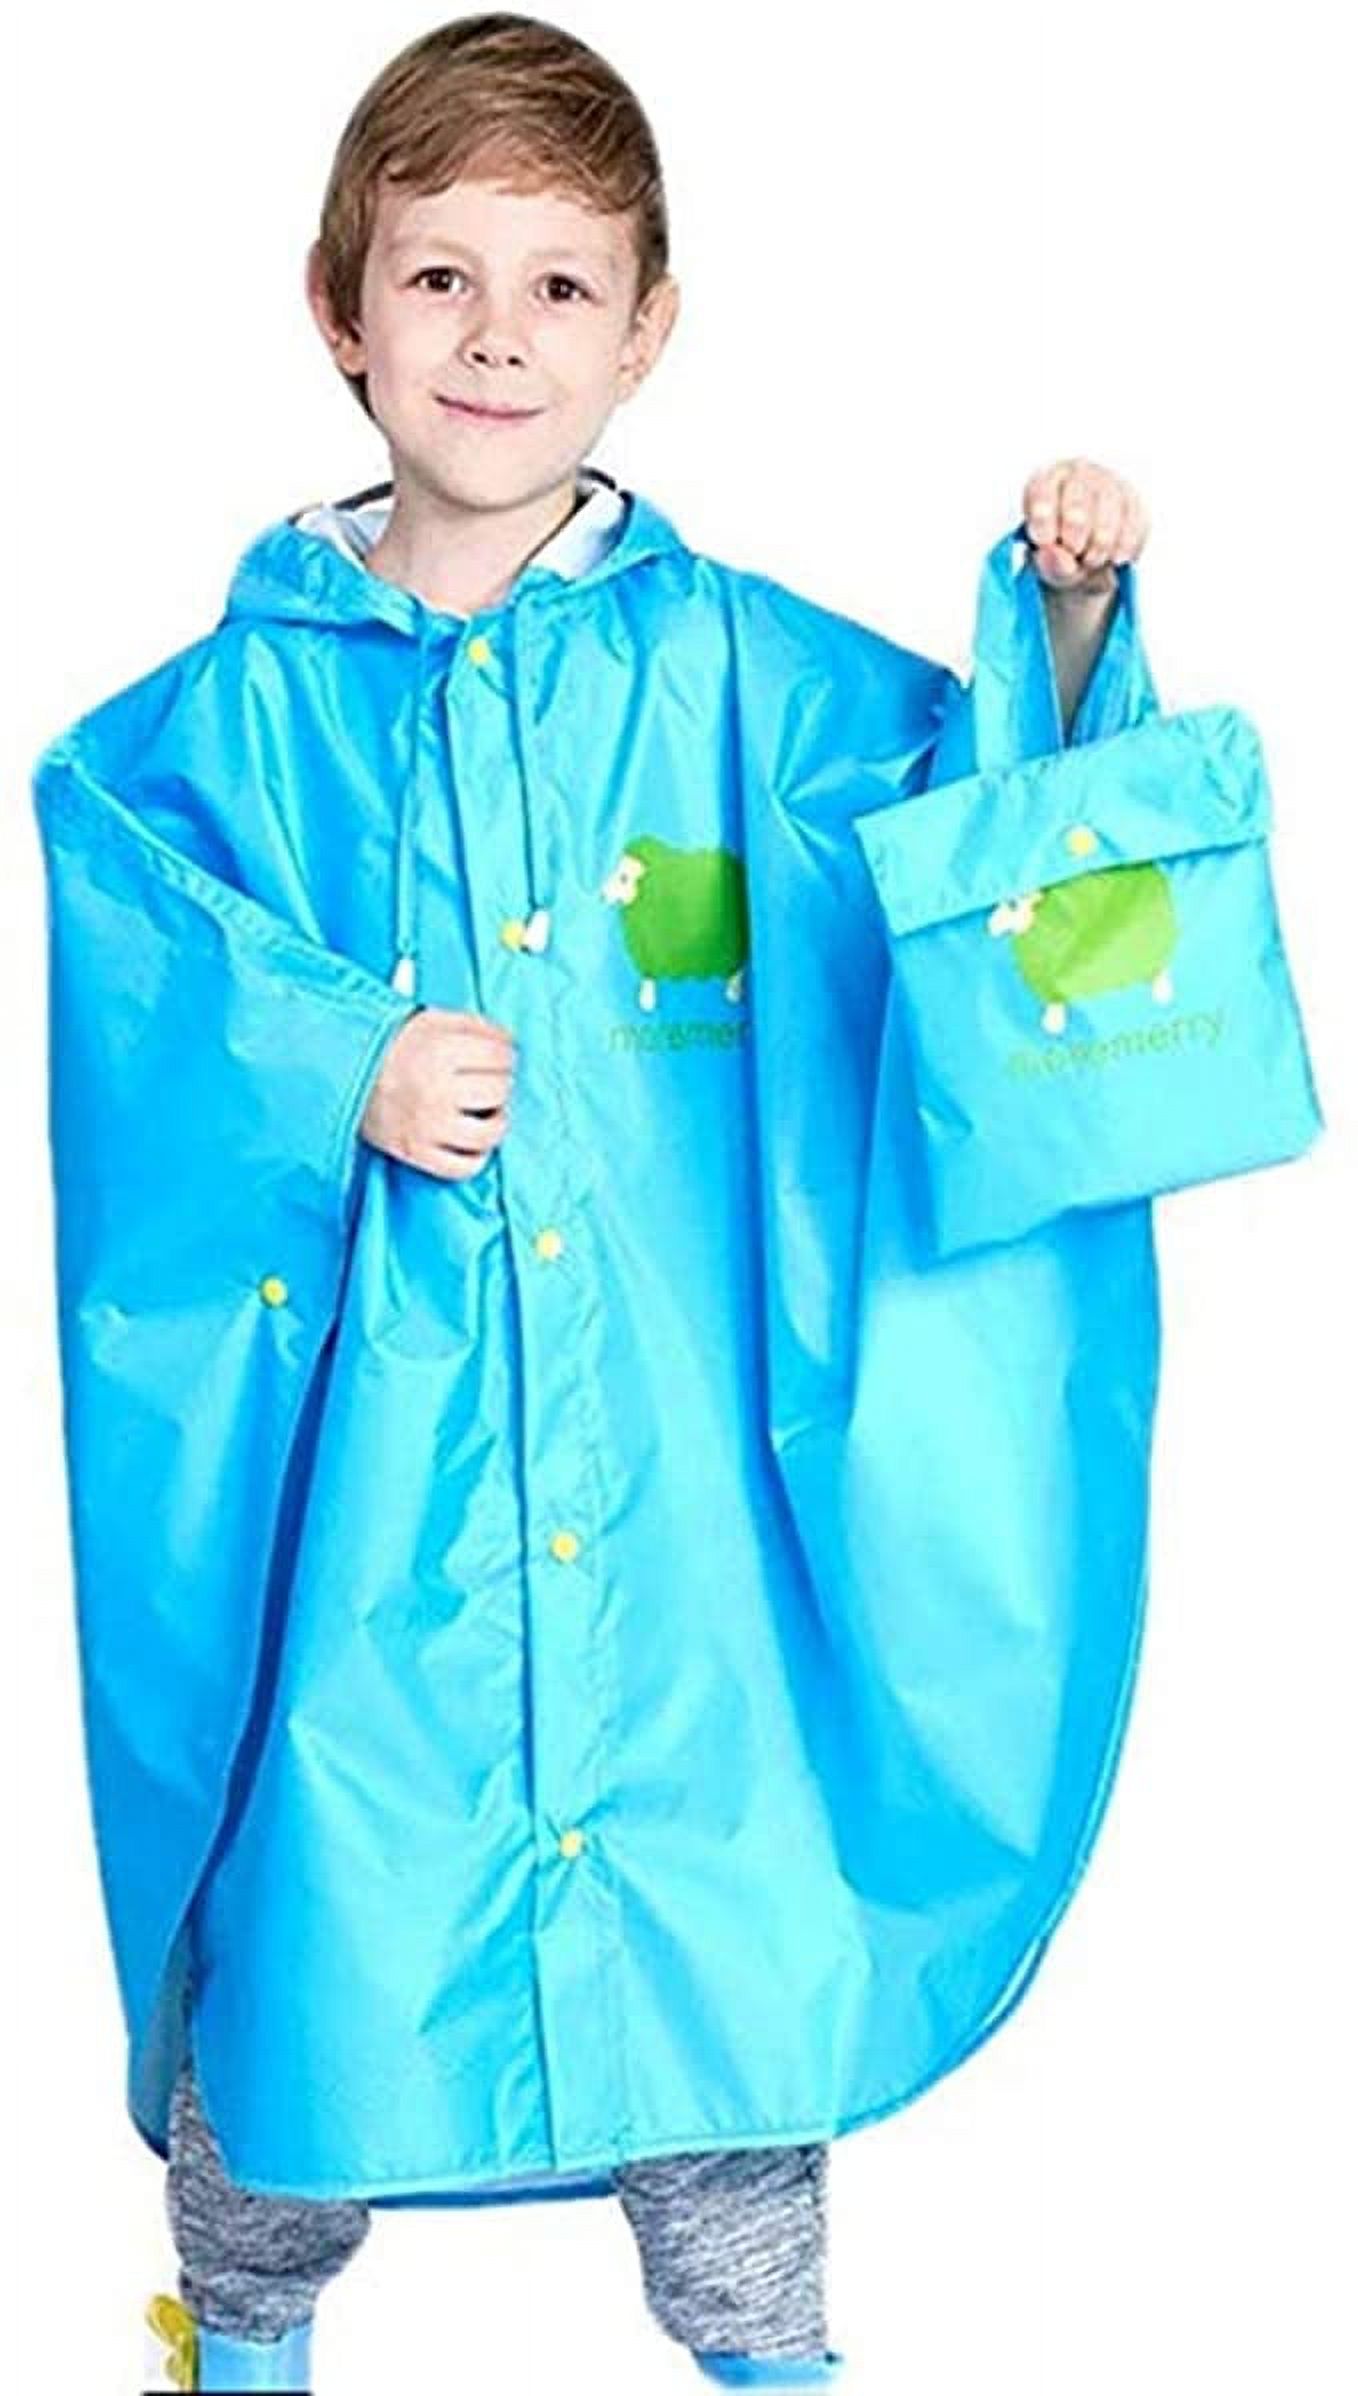 Kids Poncho Hooded Raincoat Durable Waterproof Portable Rain Cape for Boys Girls Blue XL - image 2 of 3